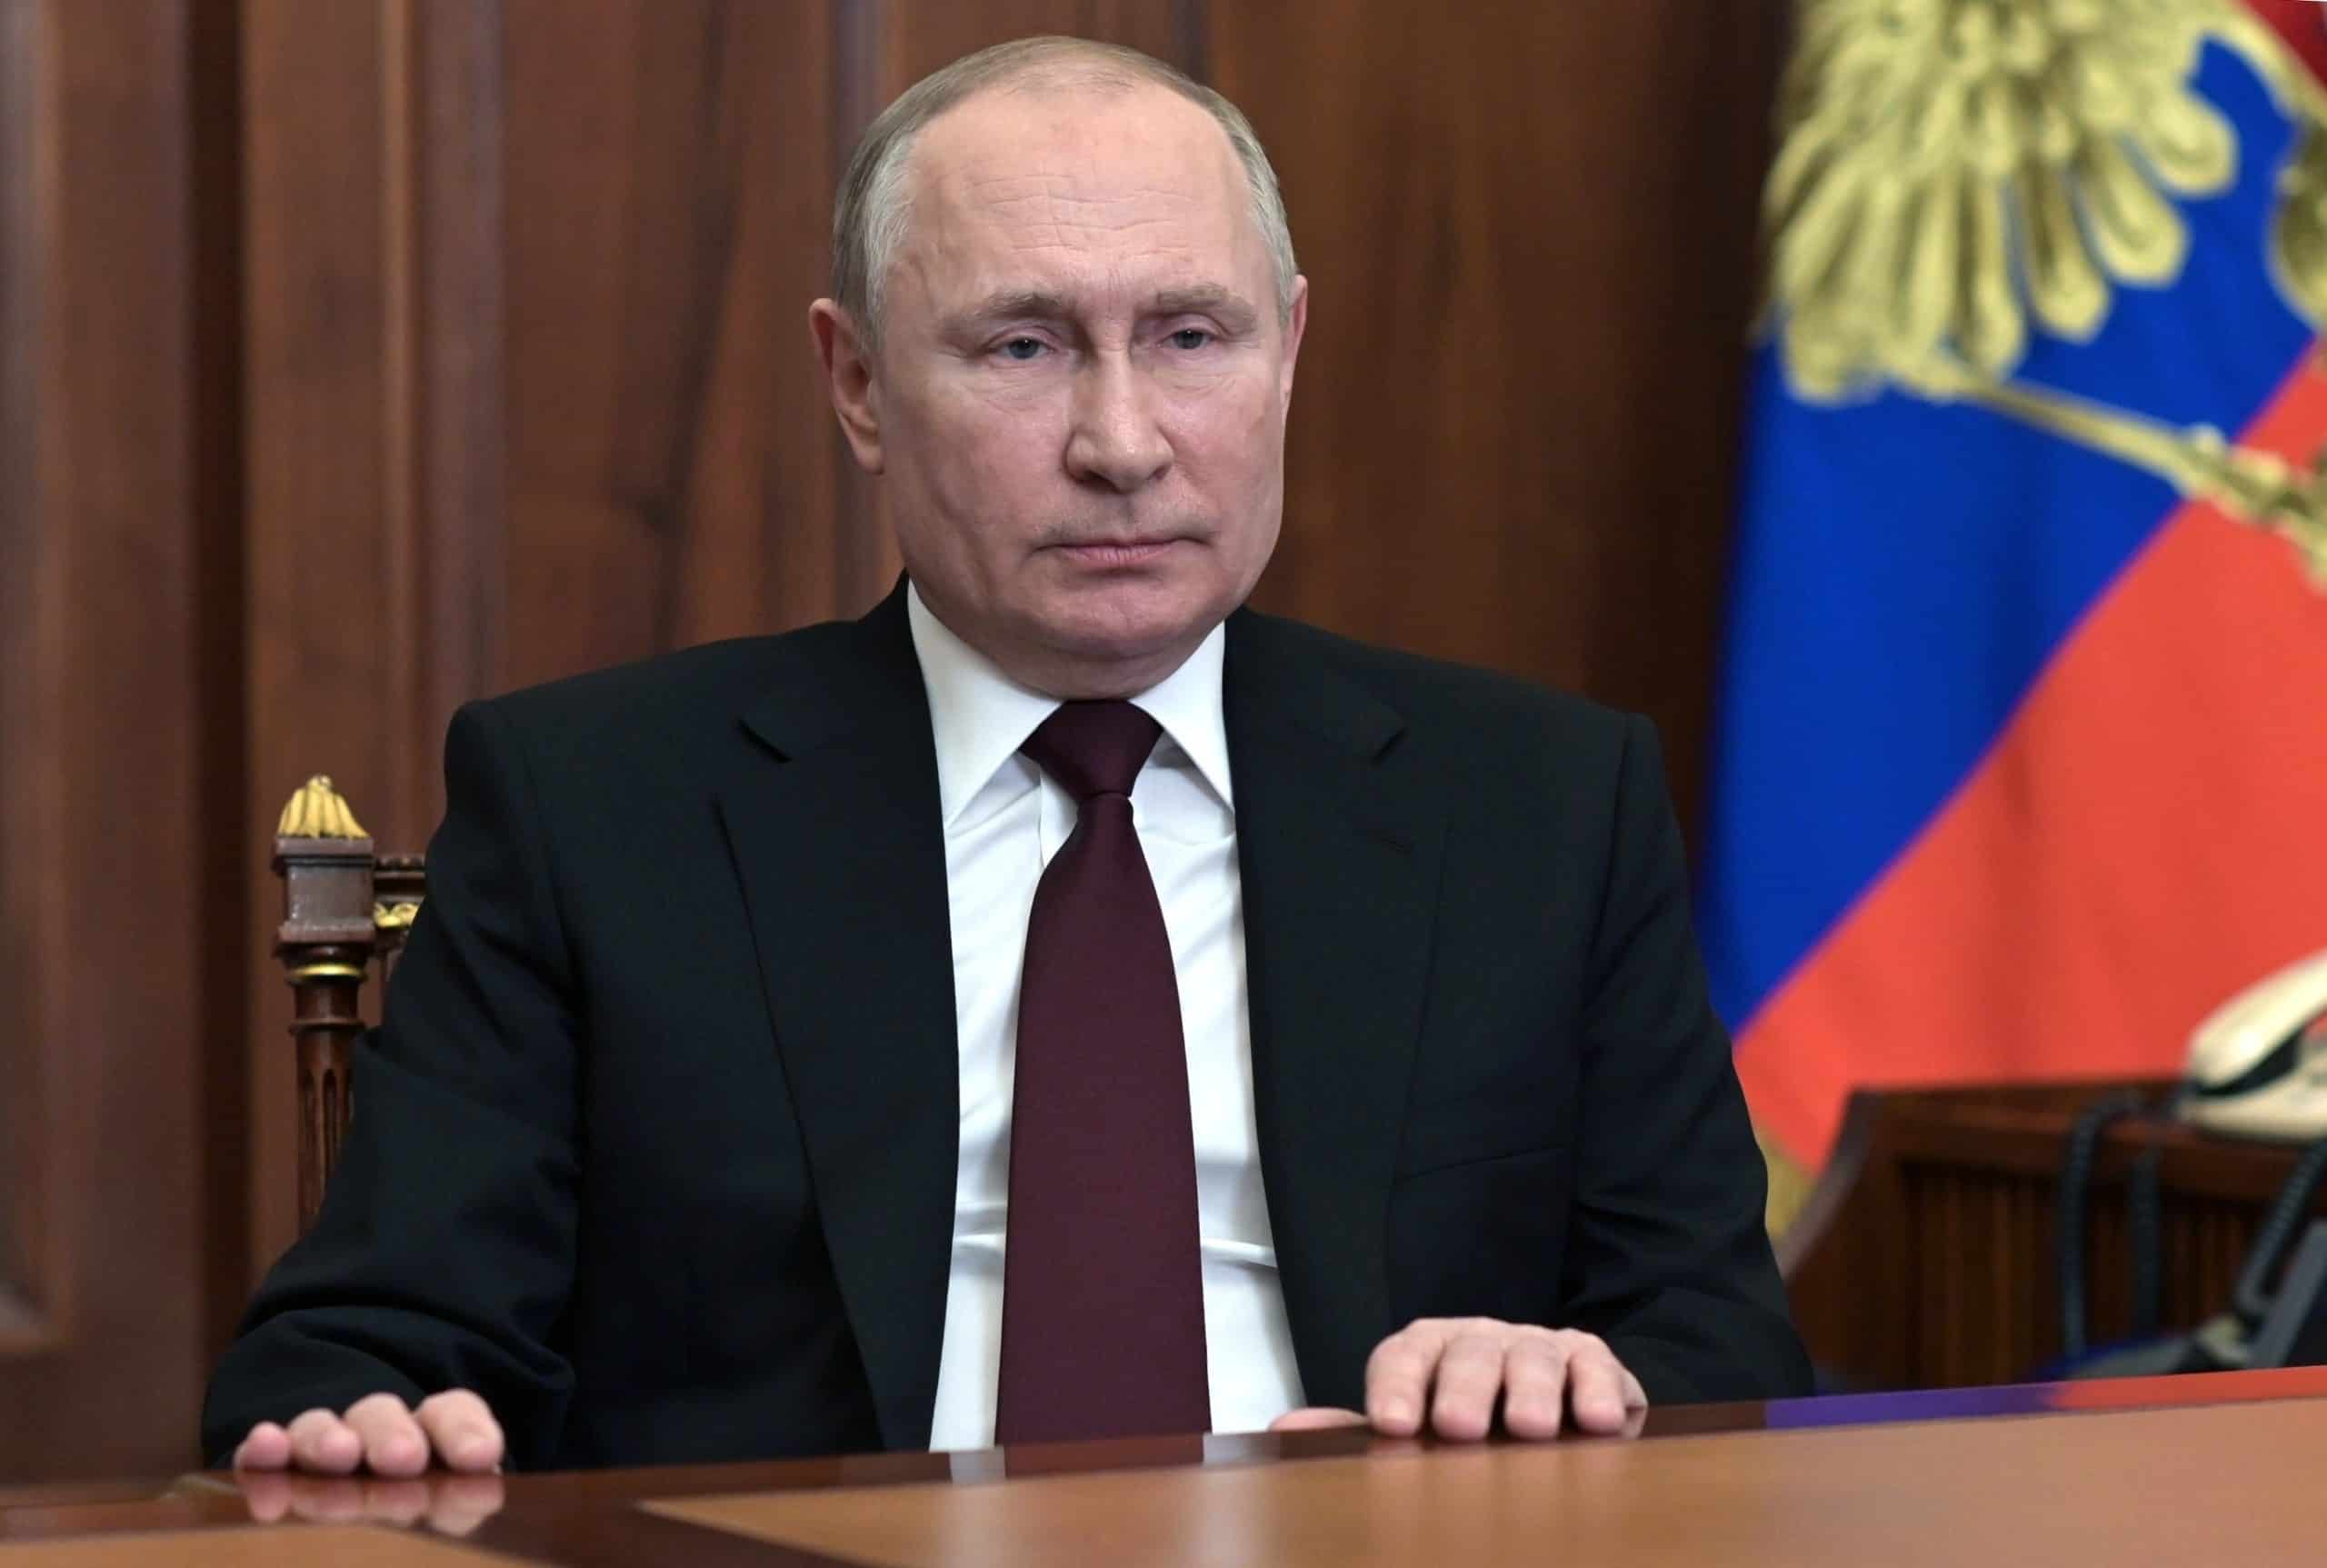 Vladimir Putin ‘wants return to era when empires ruled the world’